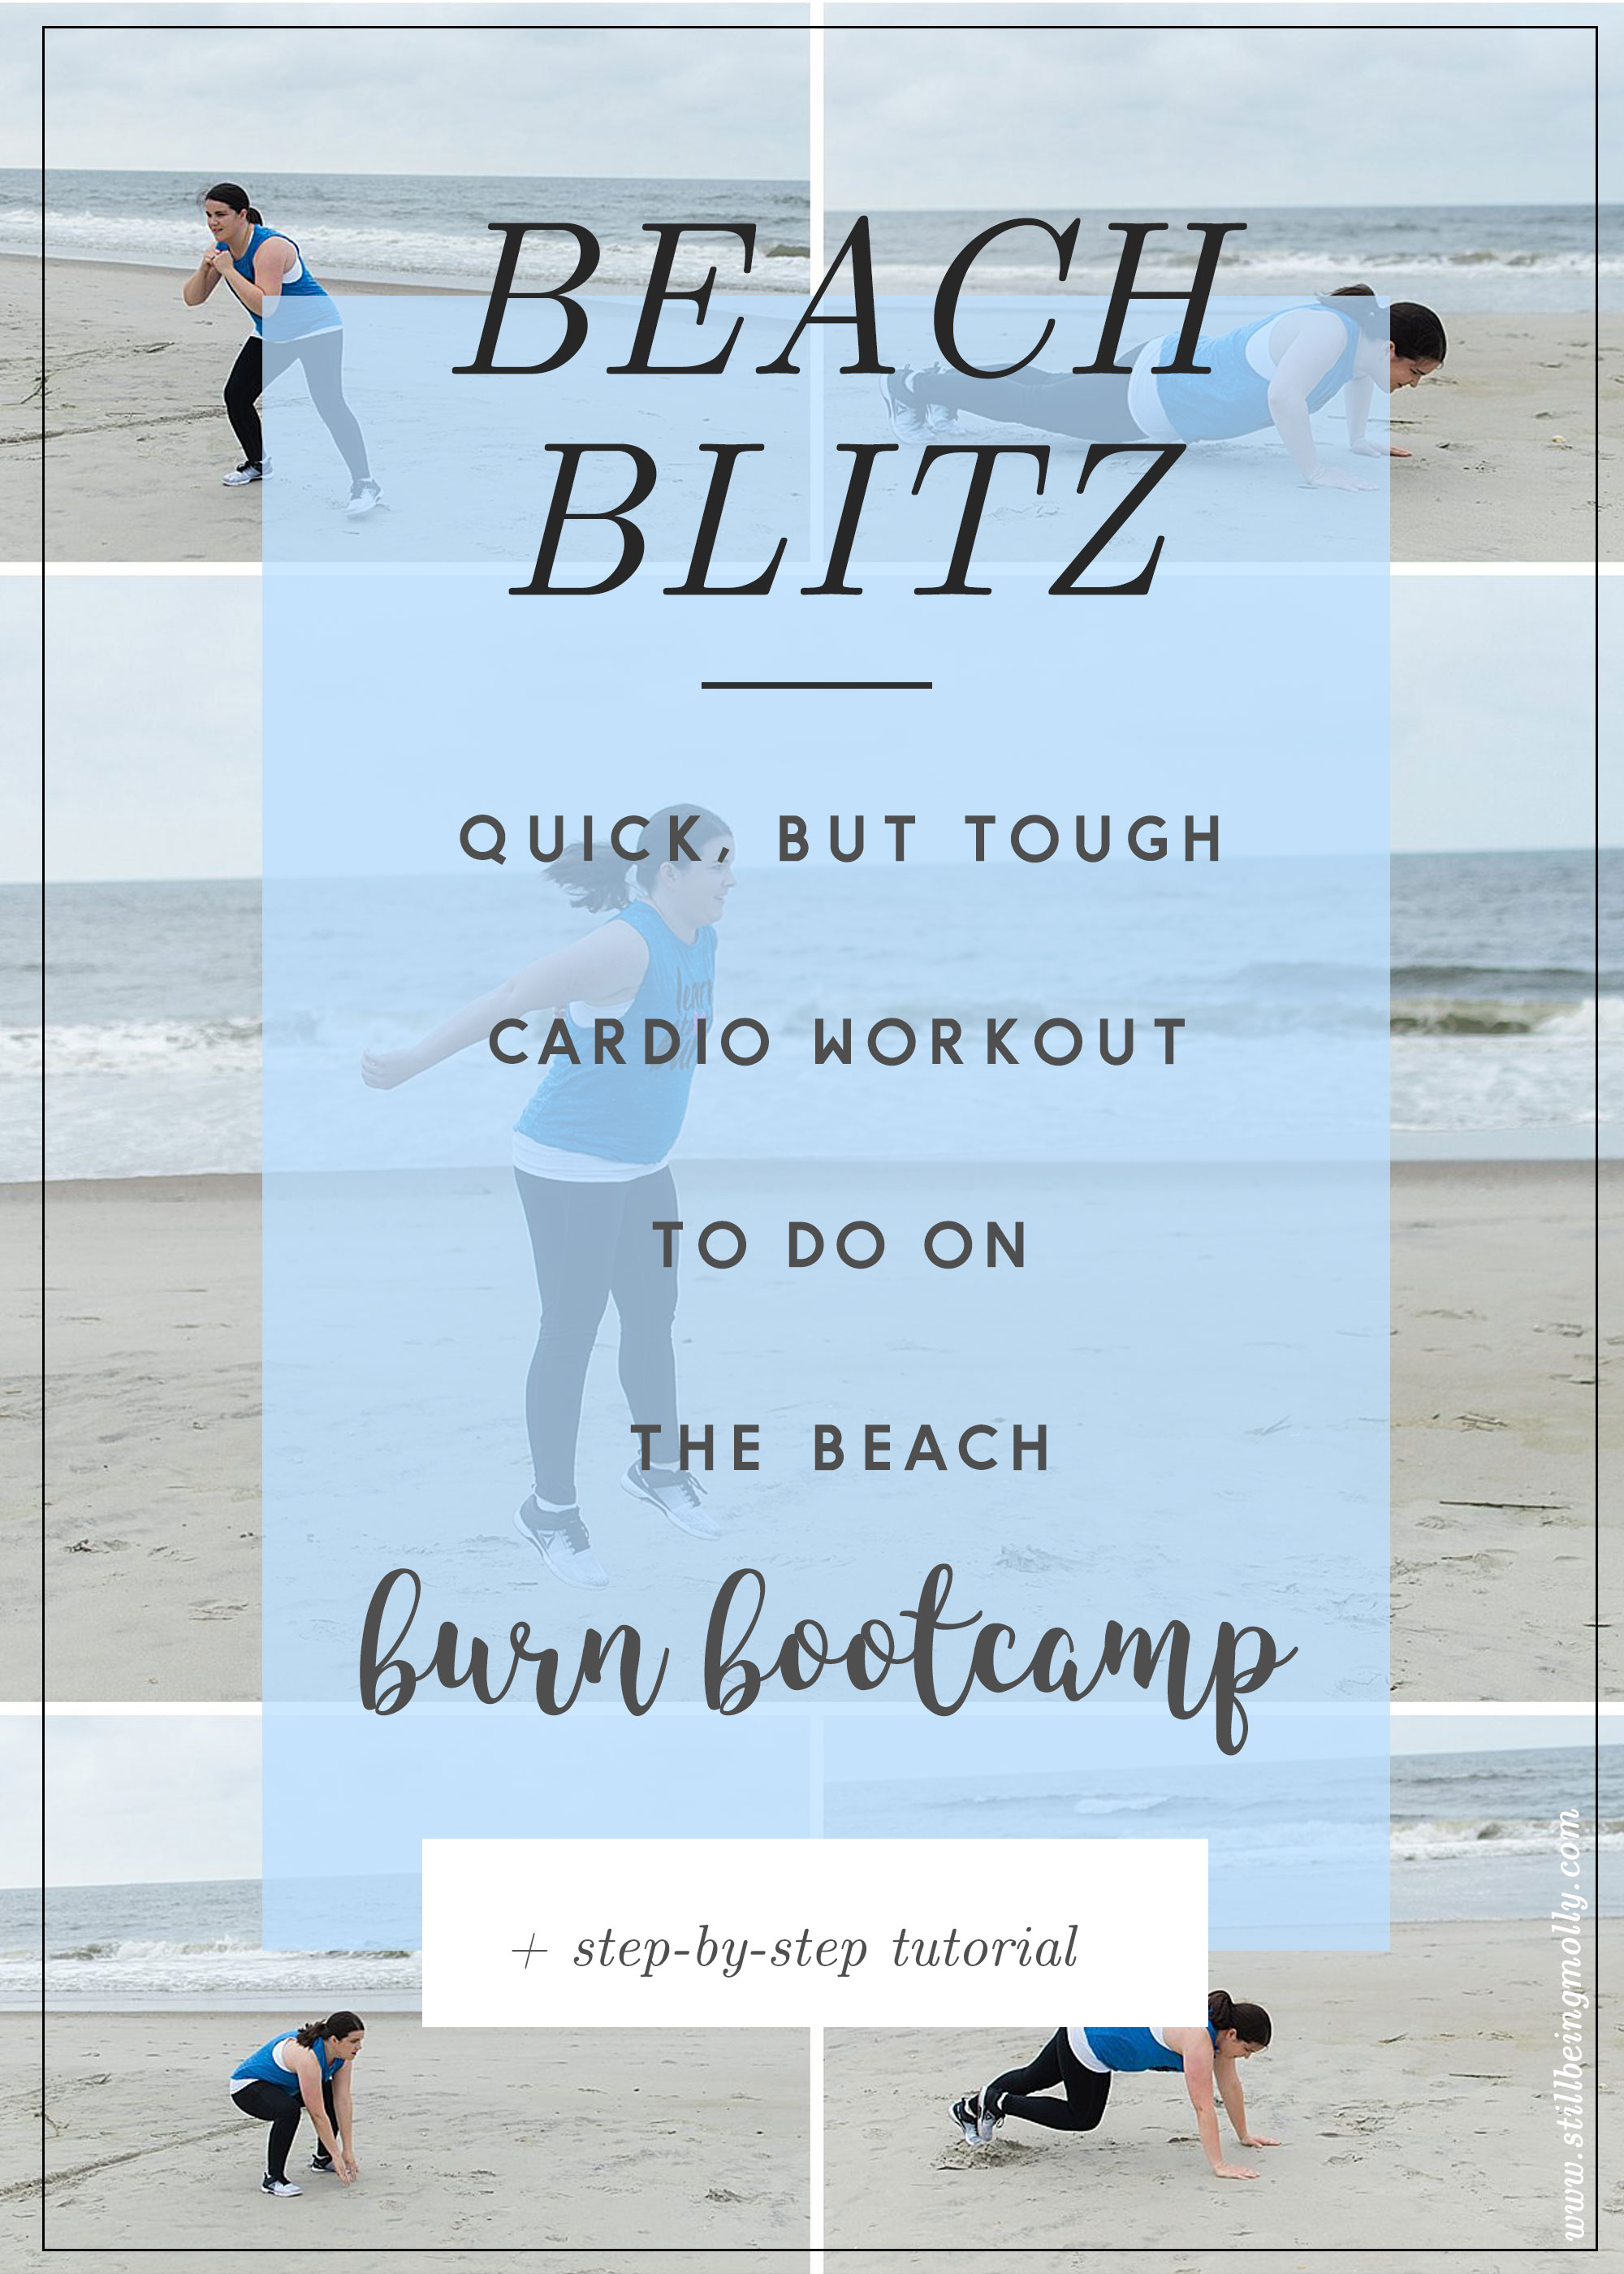 Burn Bootcamp "Beach Blitz" Cardio Workout by popular blogger Still Being Molly